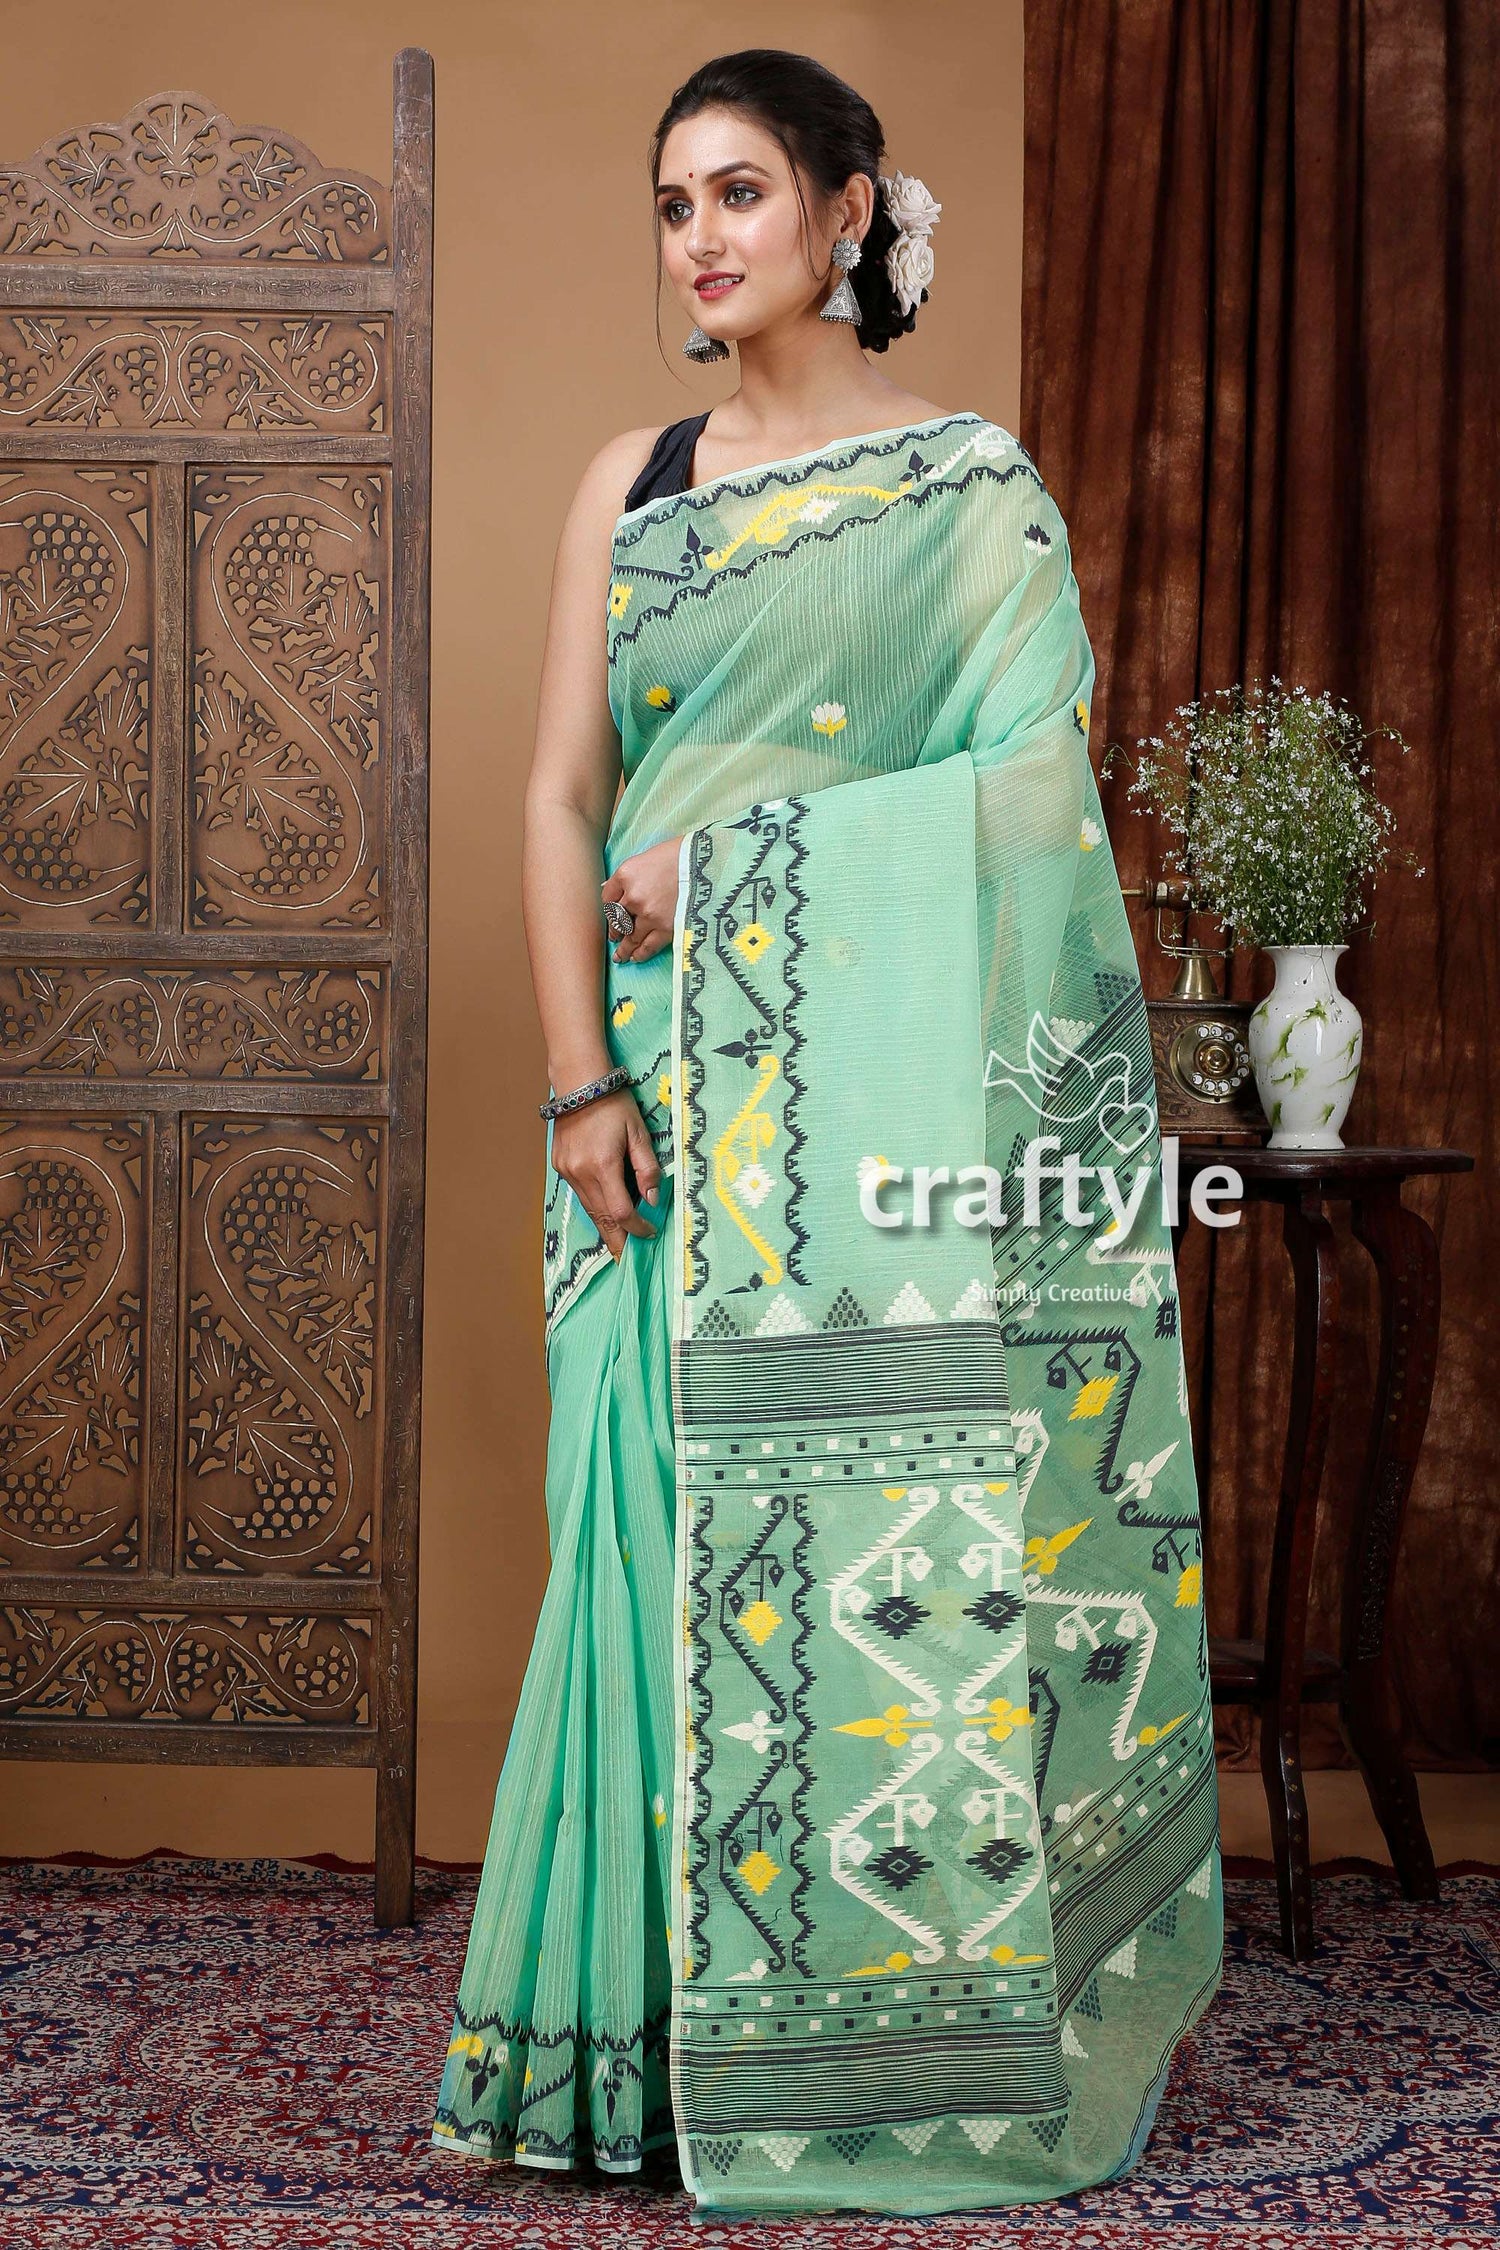 Fern Green Handloom Jamdani Saree - Exquisite Bengal Design - Craftyle